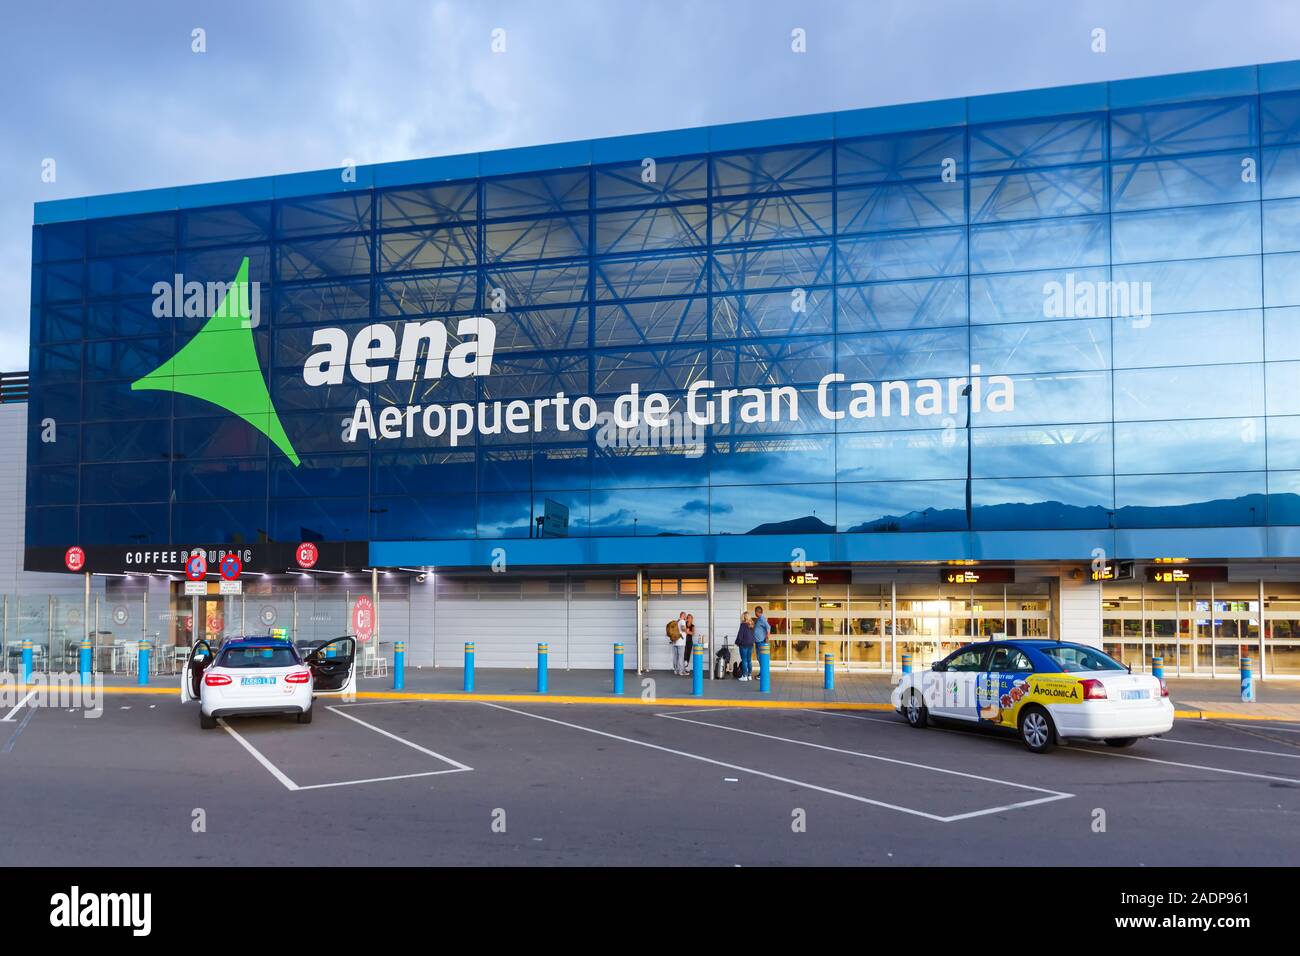 Gran canaria airport fotografías e imágenes de alta resolución - Alamy